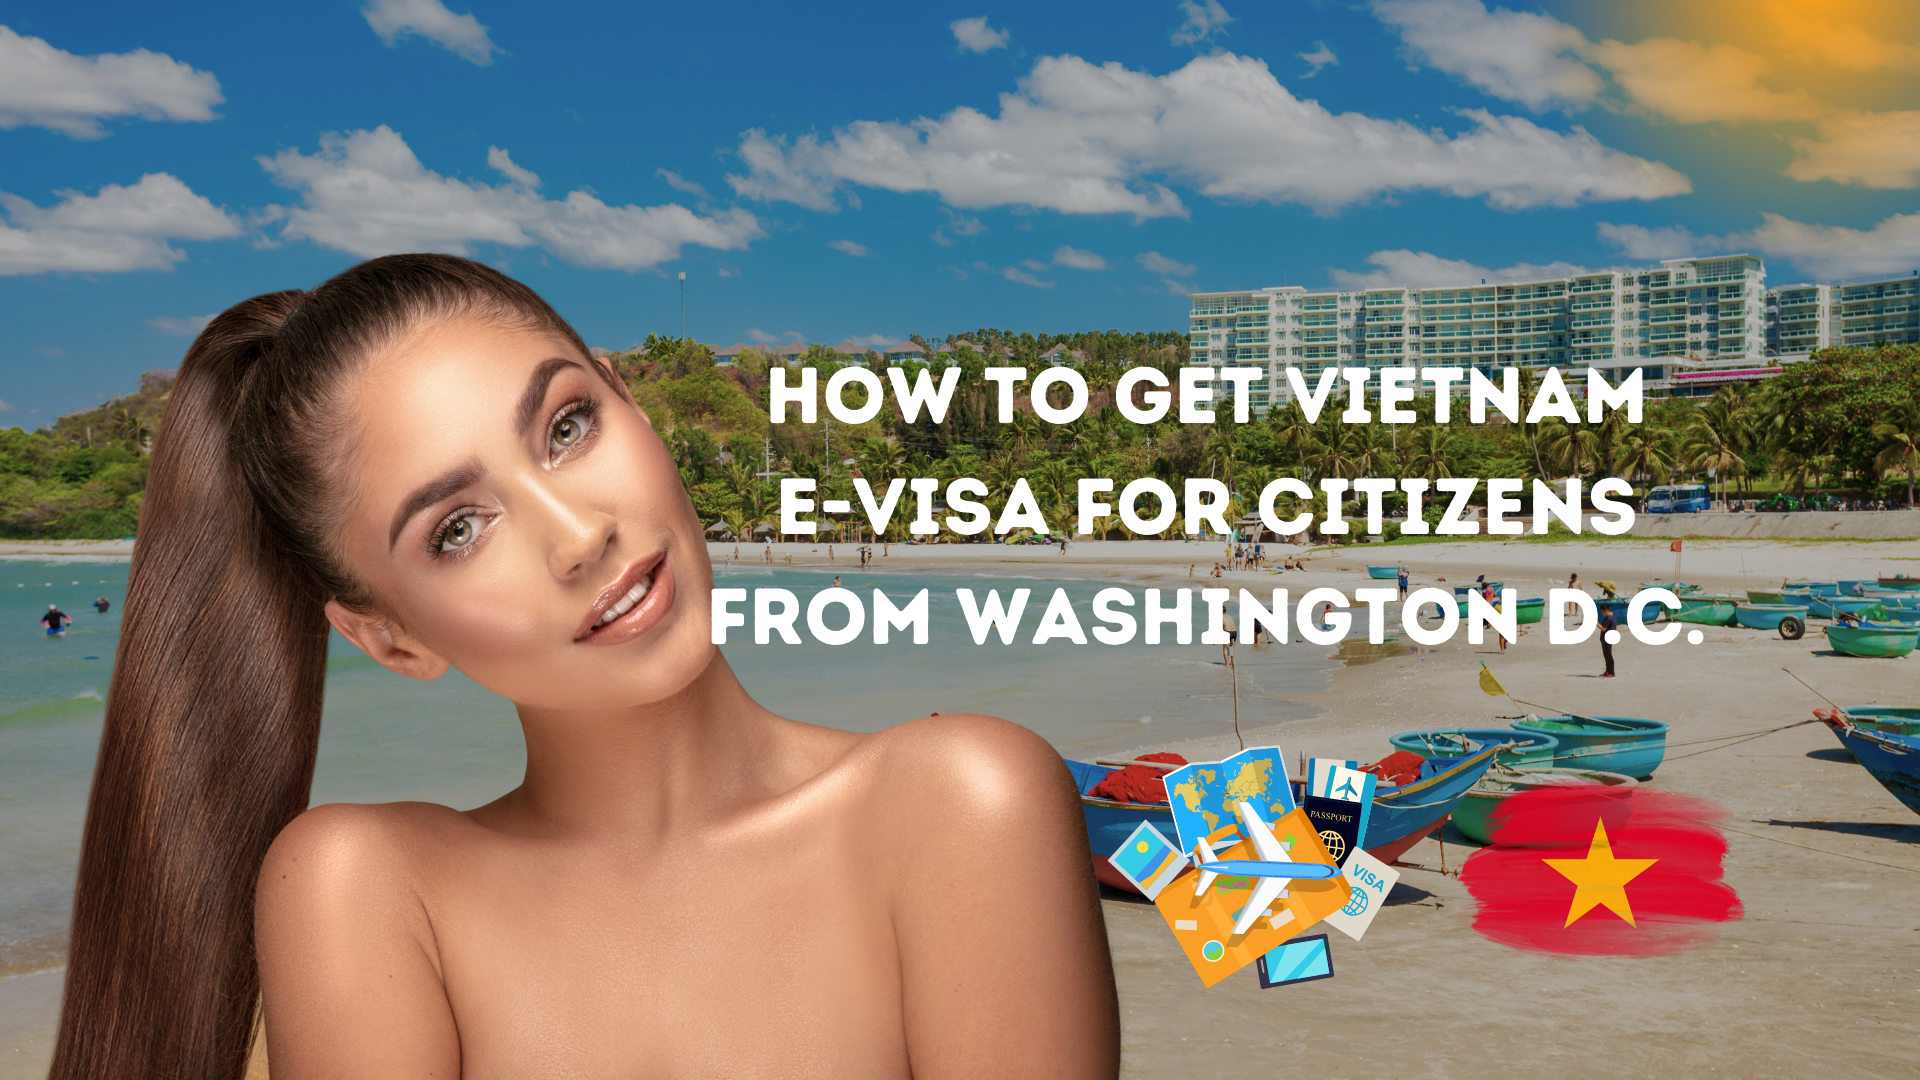 Vietnam Evisa for Citizens from Washington D.C.